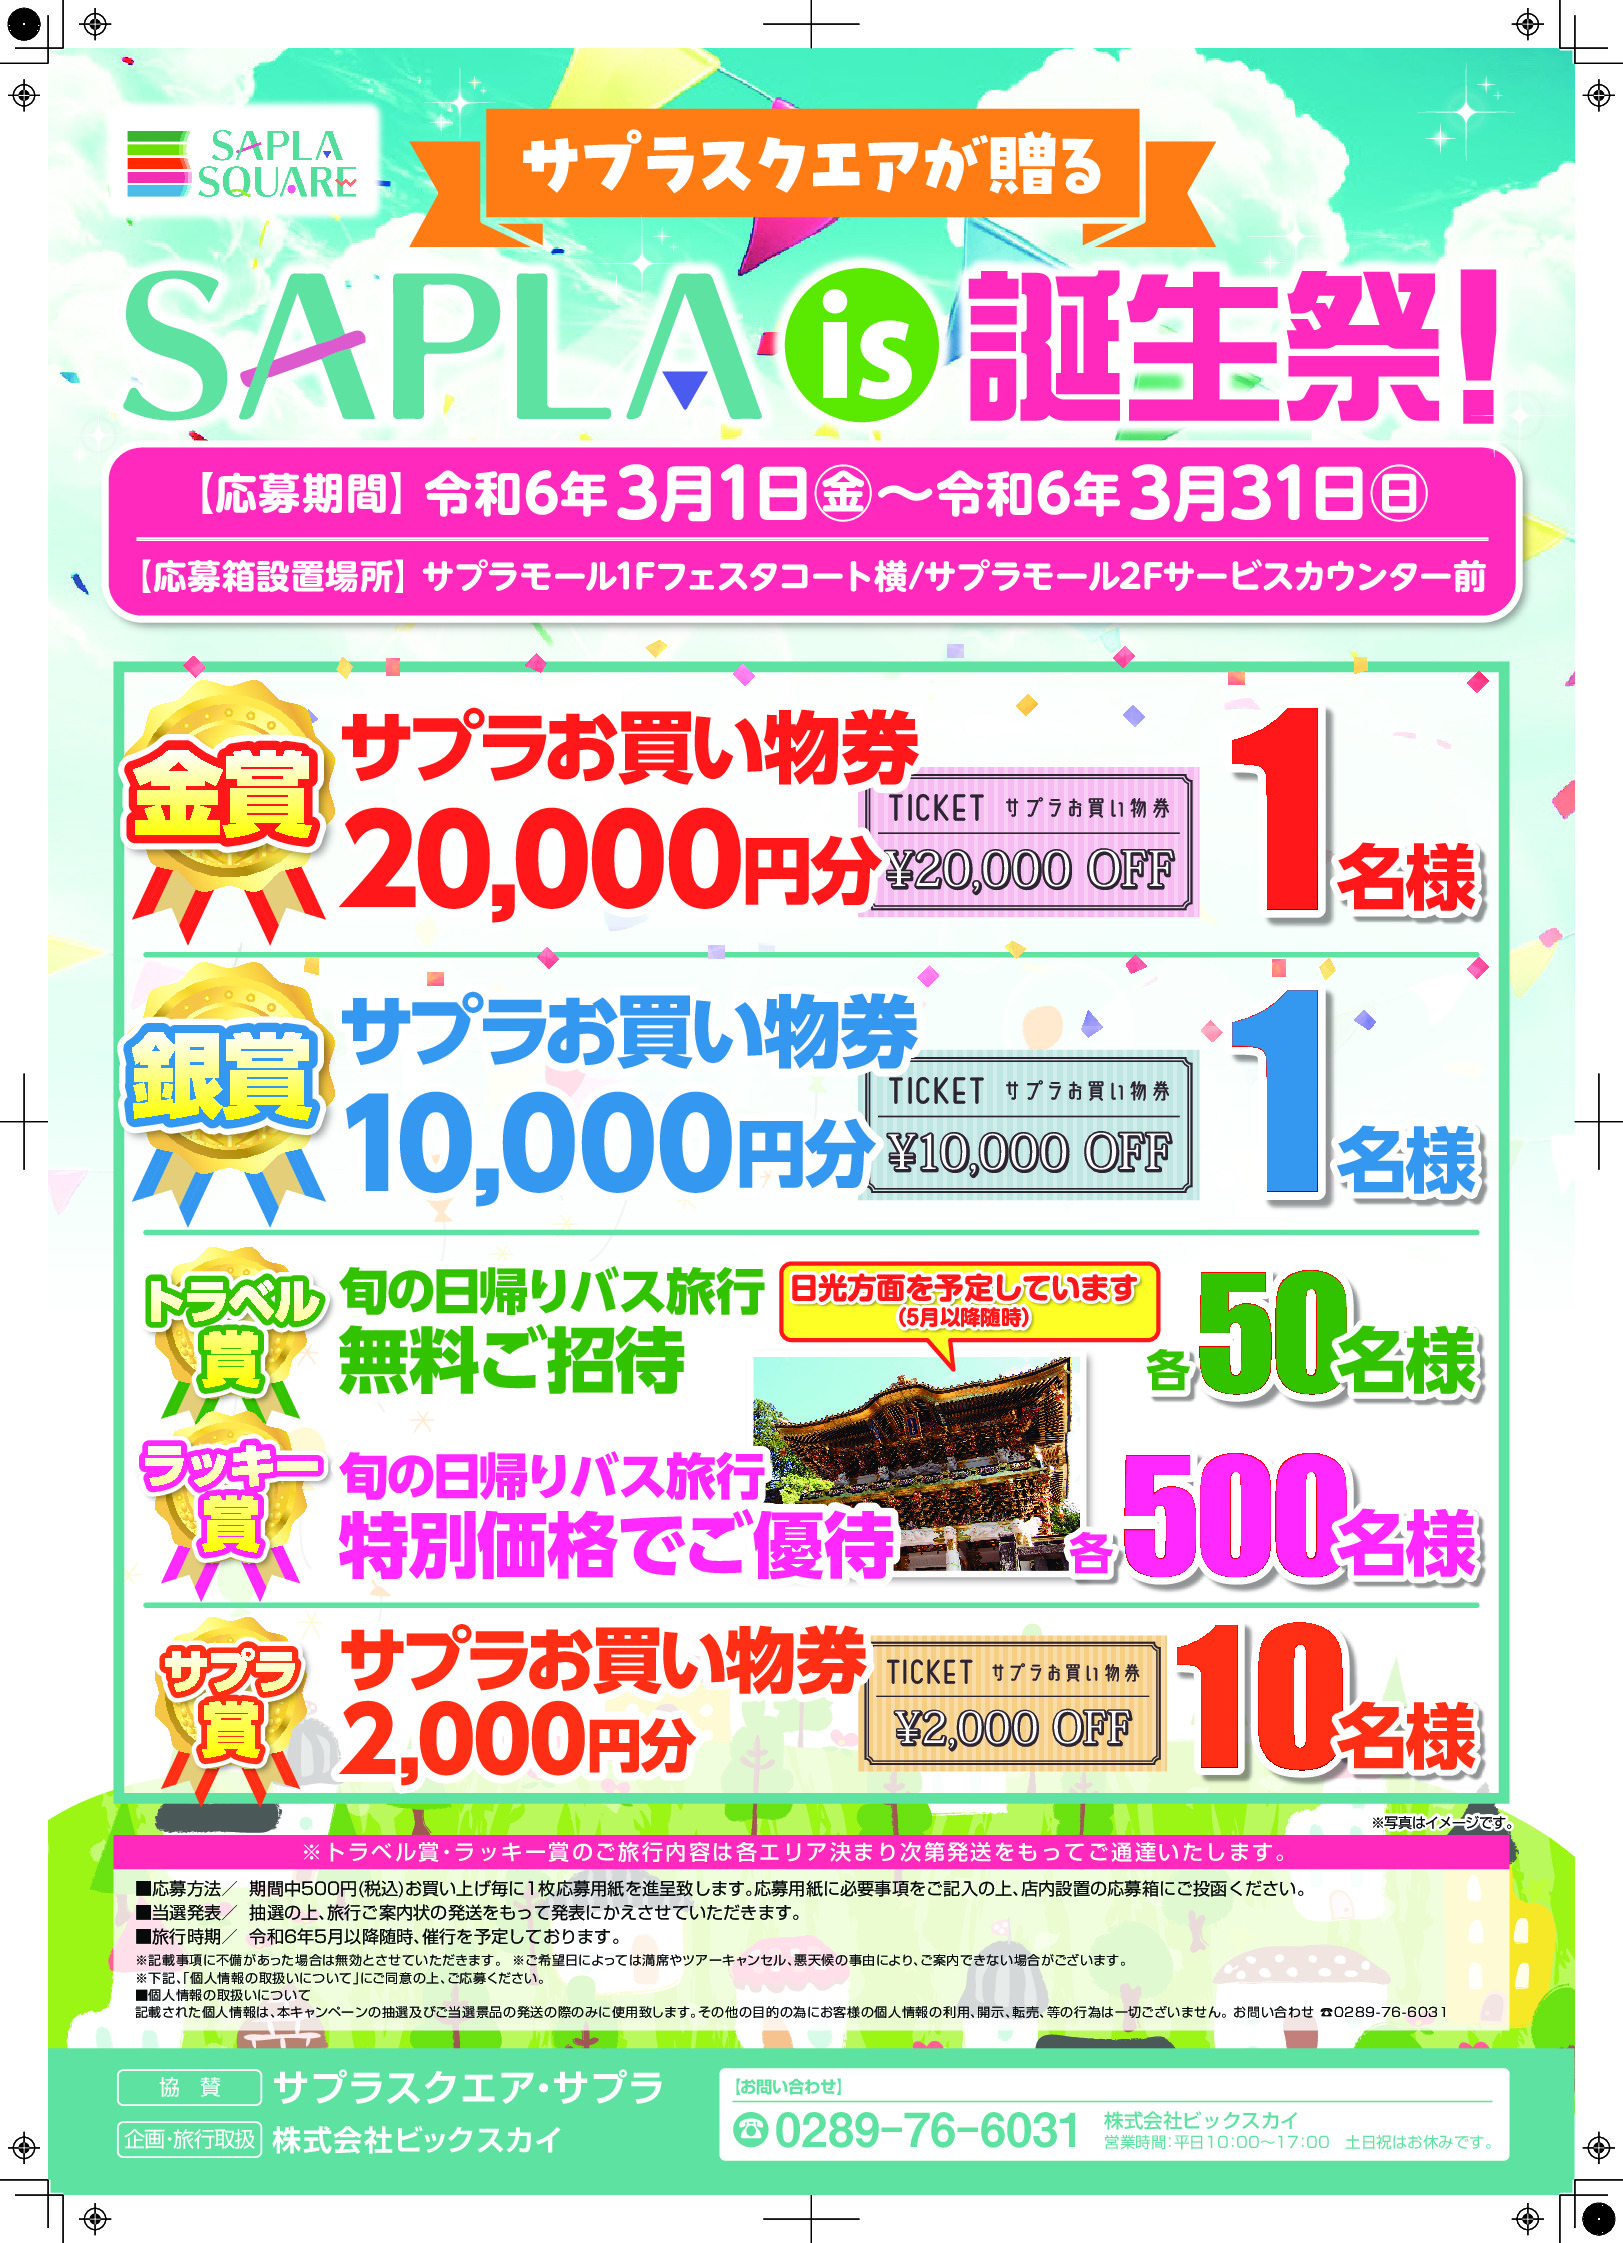 SAPLA is 誕生祭キャンペーン